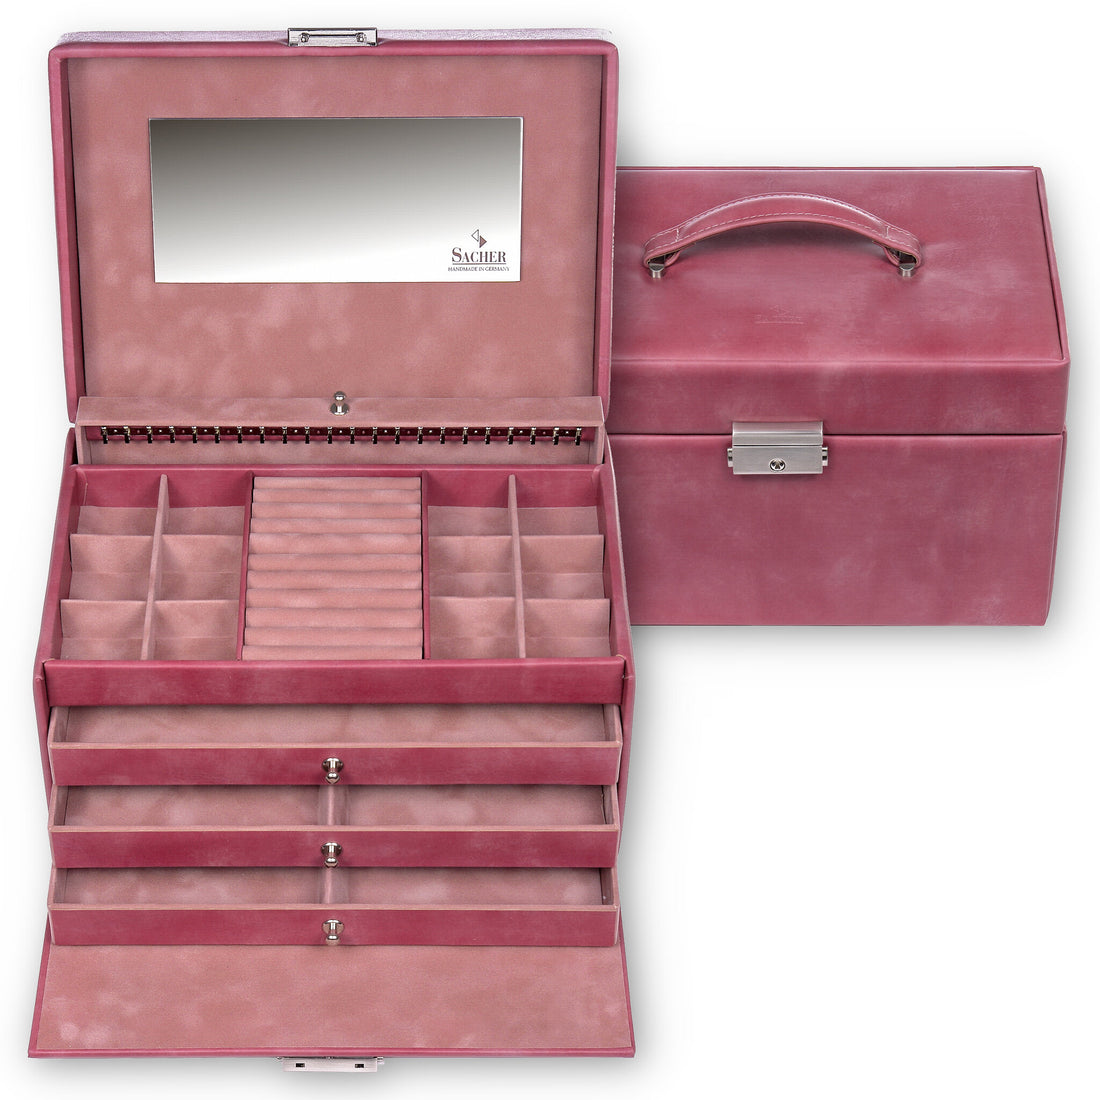 Schmuckkasten Jasmin pastello / alt rosé – Manufaktur SACHER 1846 |  Offizieller Store